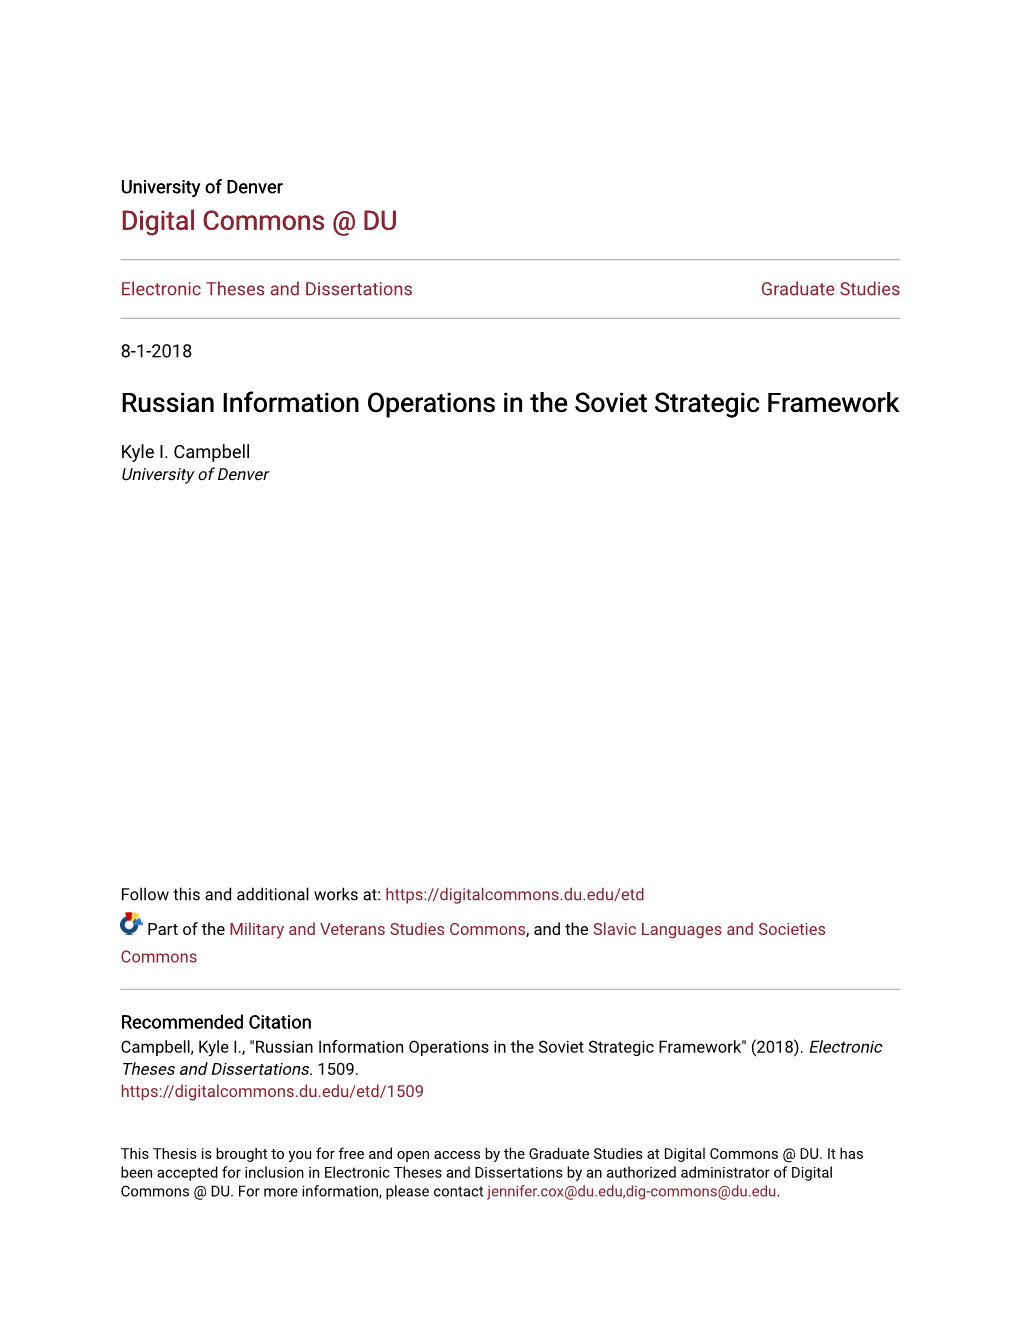 Russian Information Operations in the Soviet Strategic Framework